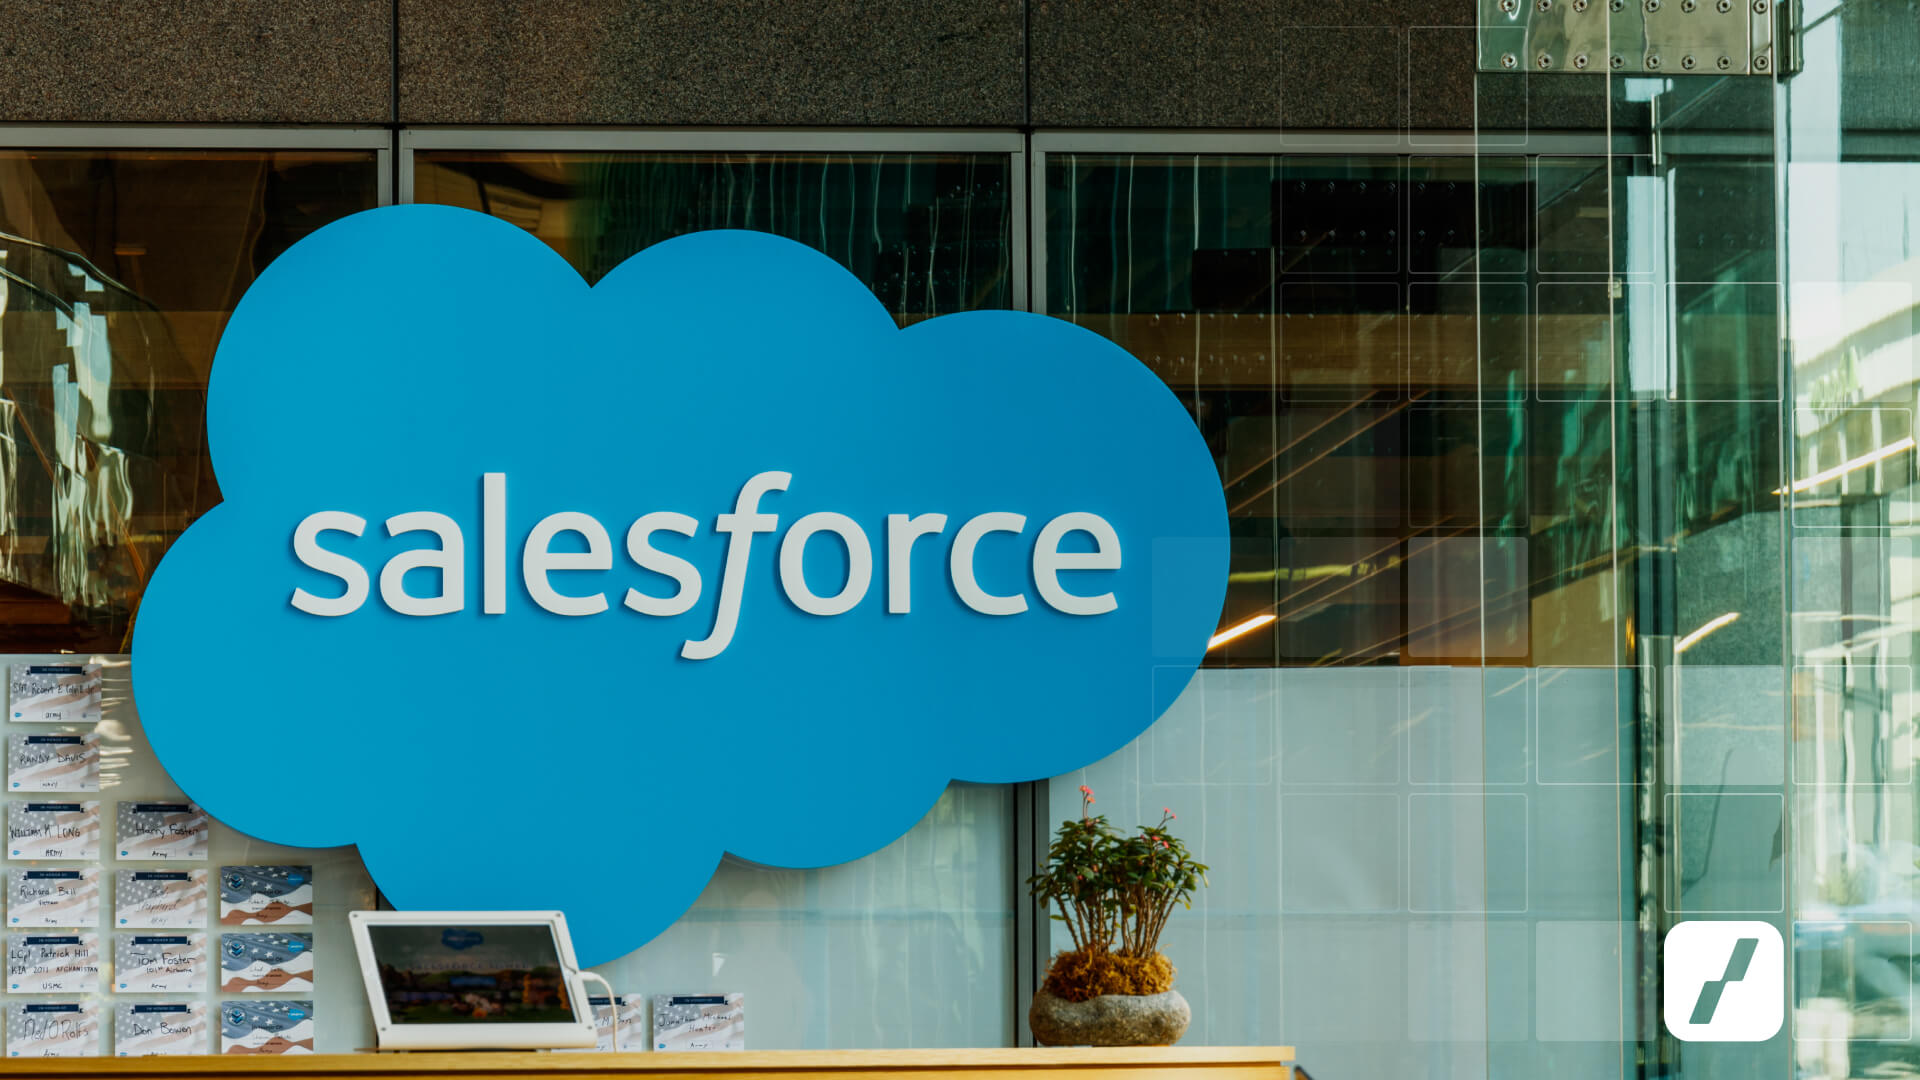 koers aandeel Salesforce - aandeel Salesforce advies